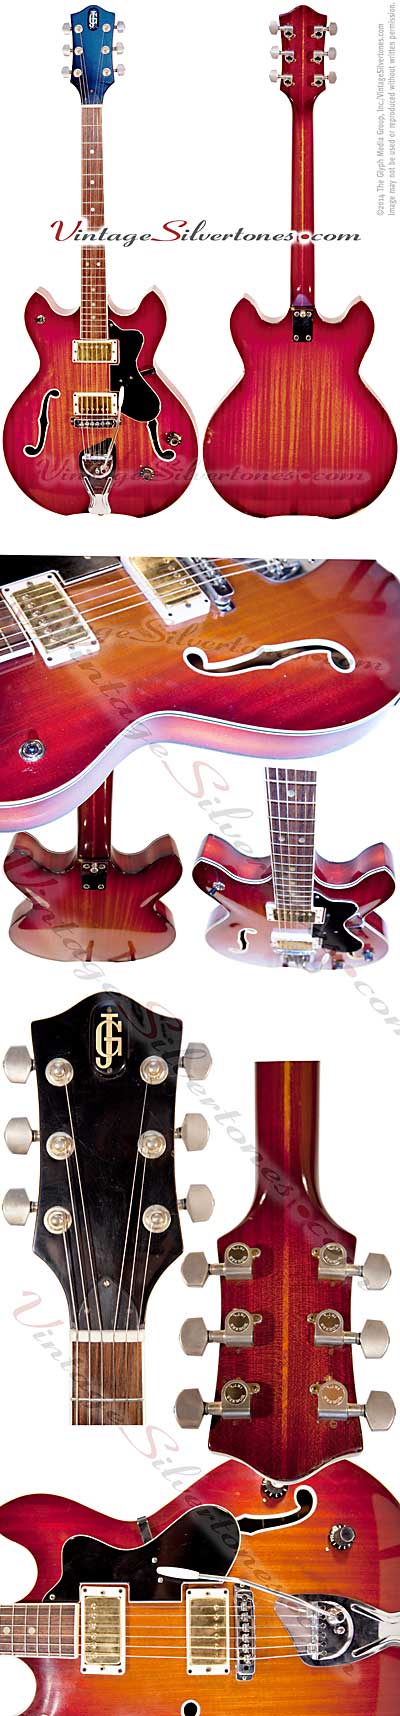 JG electric guitar 2 pick up made in USA circa19 redburst double cutaway amp hollow body tremolo tailpiece